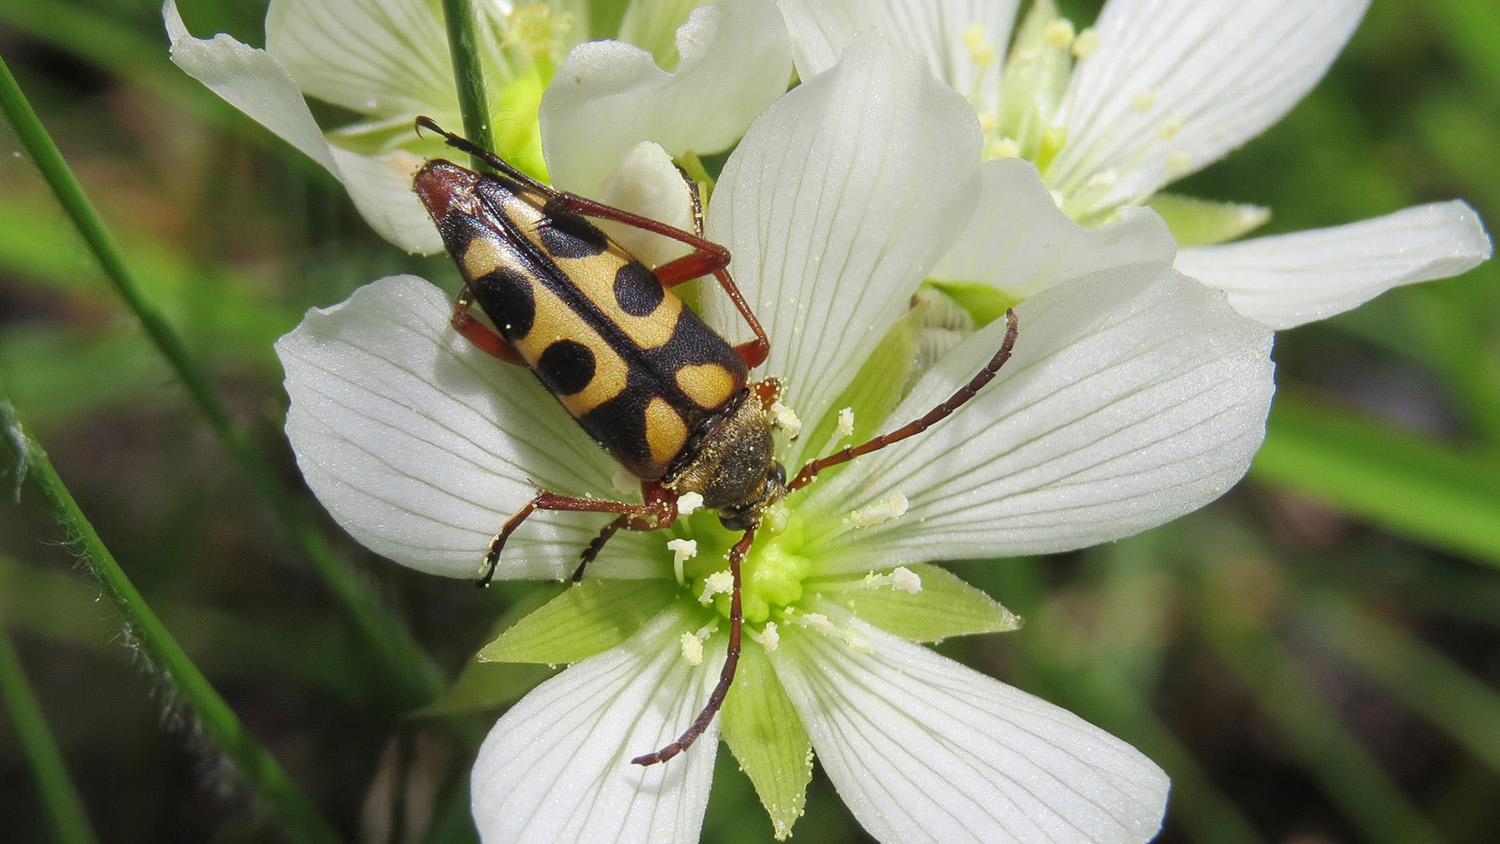 Longhorn beetle on a Venus flytrap blossom. Photo credit: Clyde Sorenson.